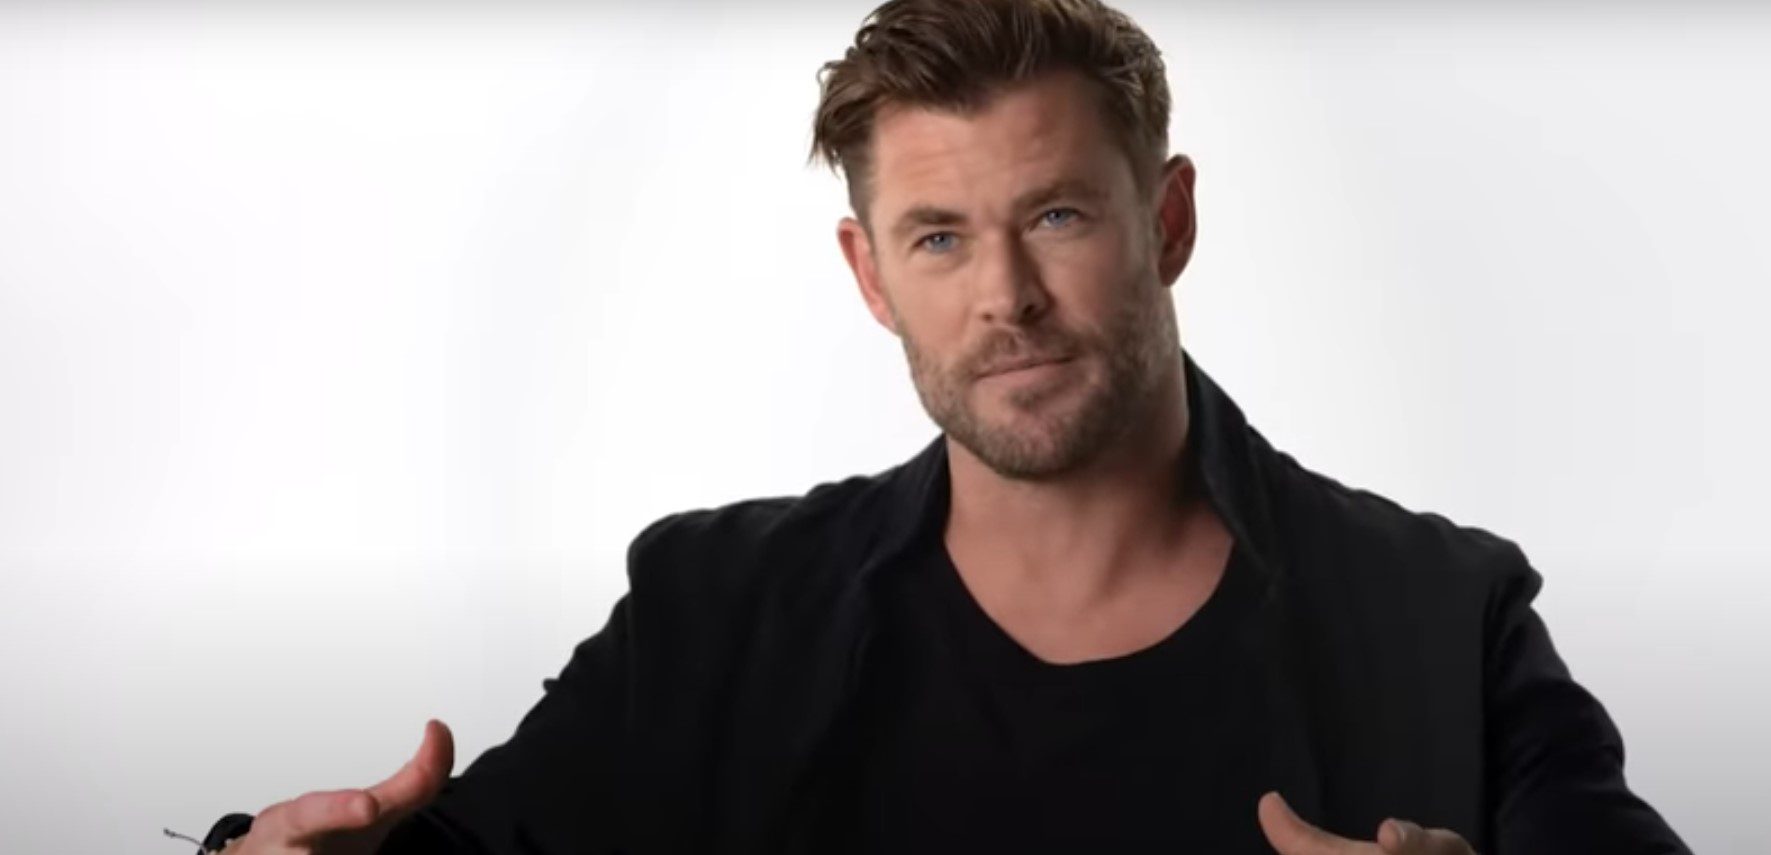 Where Was Chris Hemsworth Born?